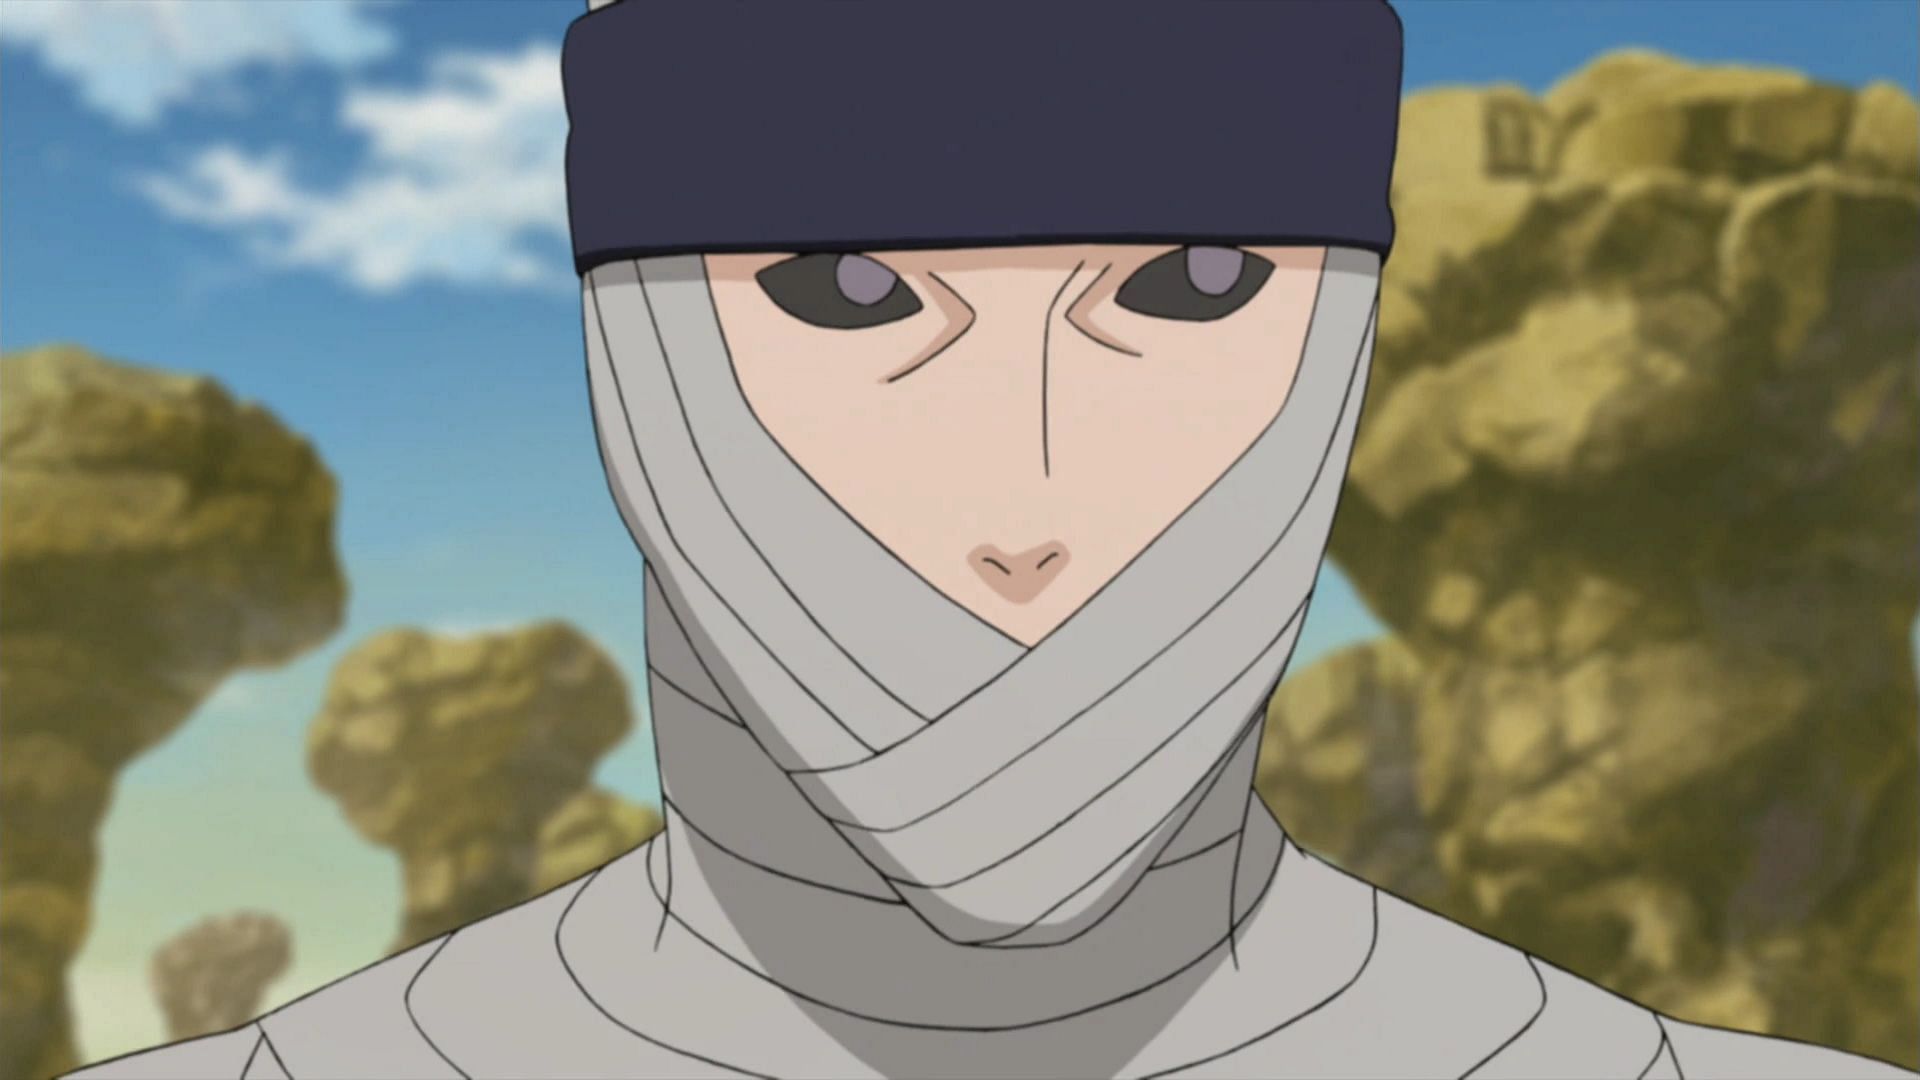 Mu as seen in Naruto (Image via Studio Pierrot)